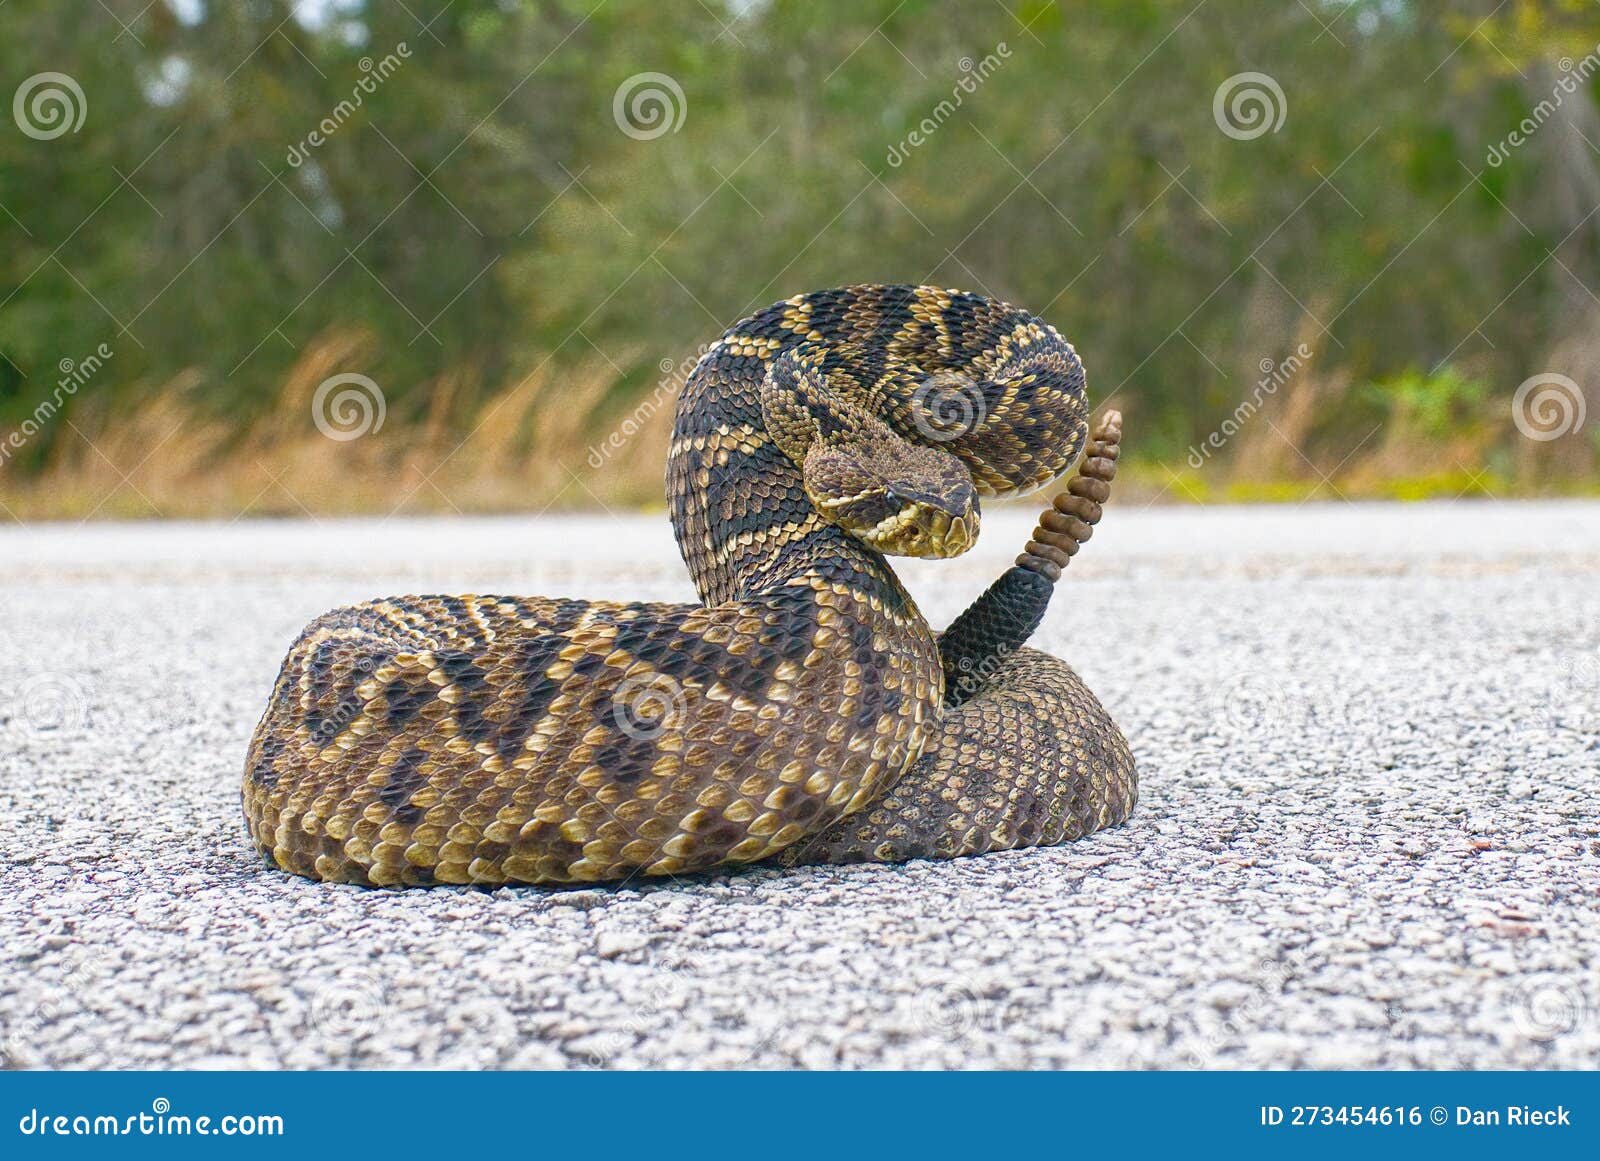 the king of all rattlesnake in the world, eastern diamondback rattler - crotalus adamanteus - in strike pose facing camera. 9